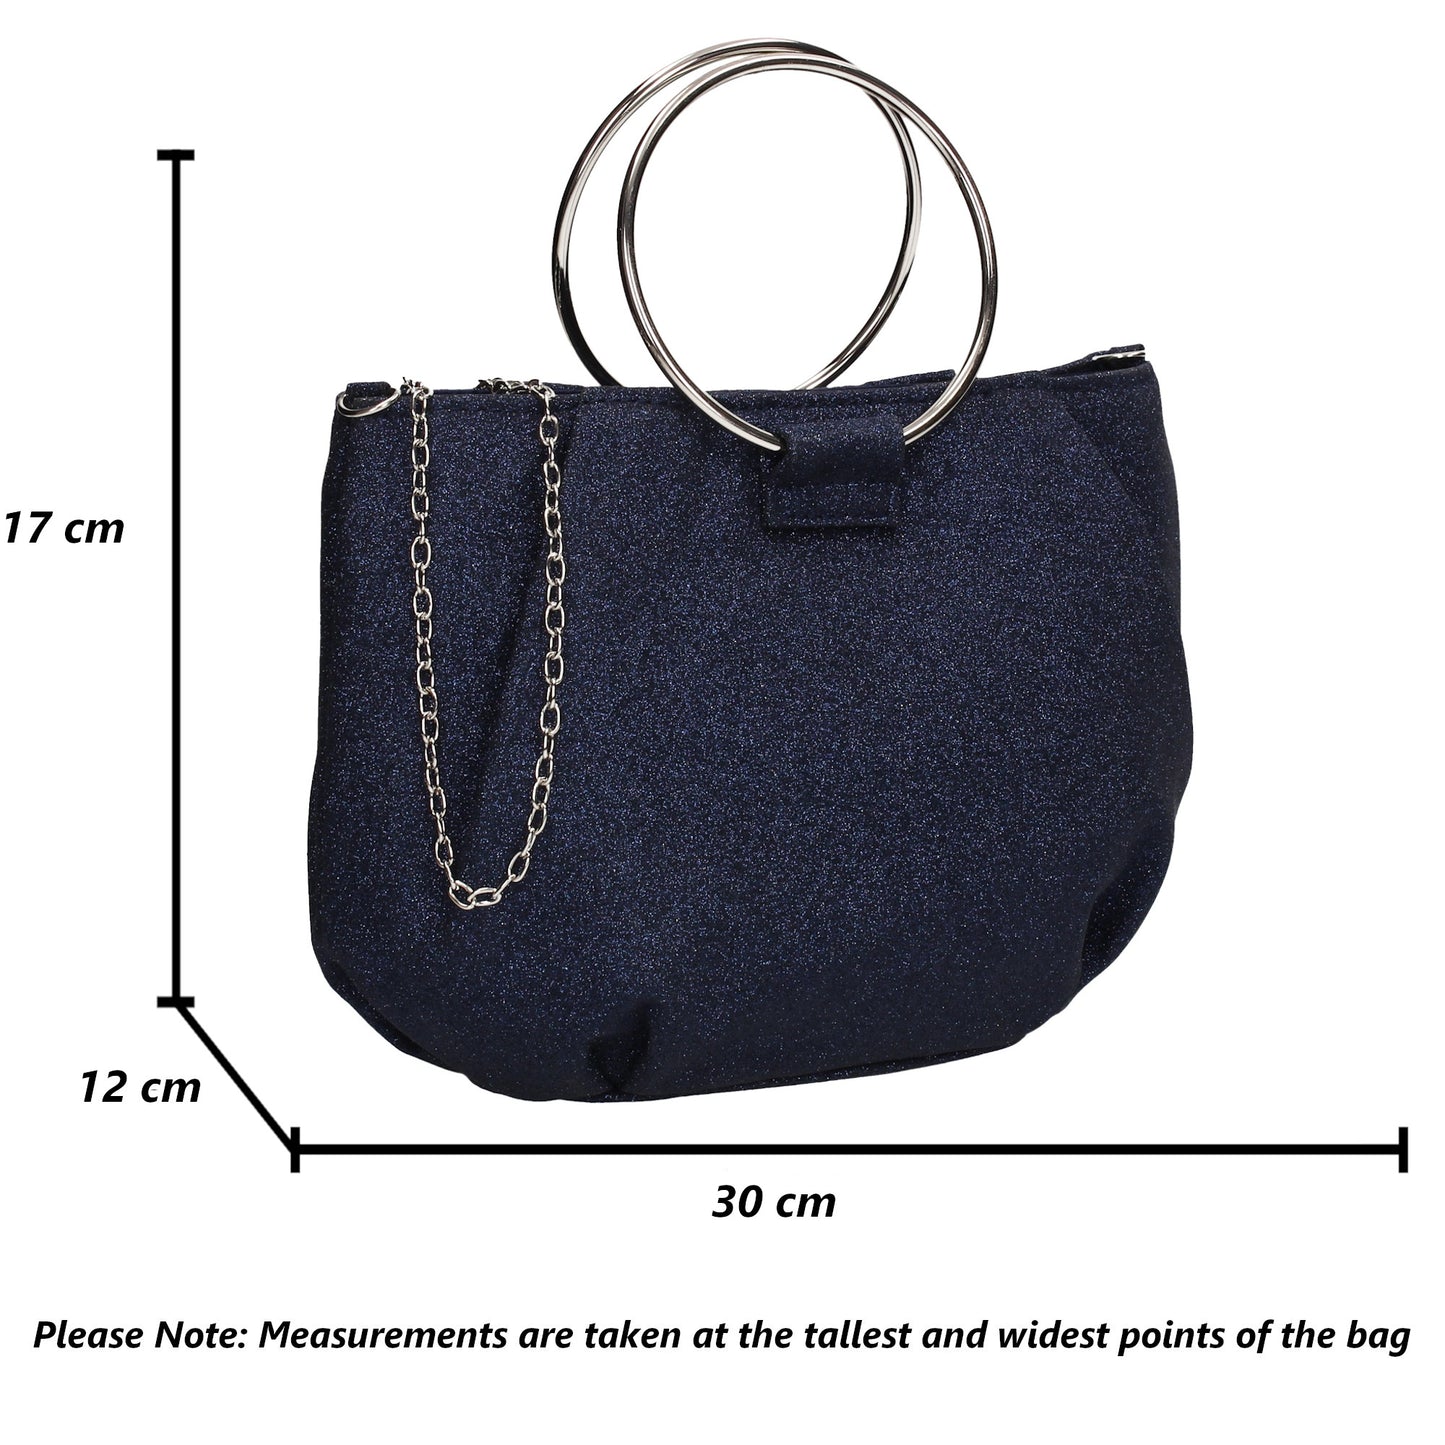 Athena Glitter Sparkle Evening Handbag Navy Blue